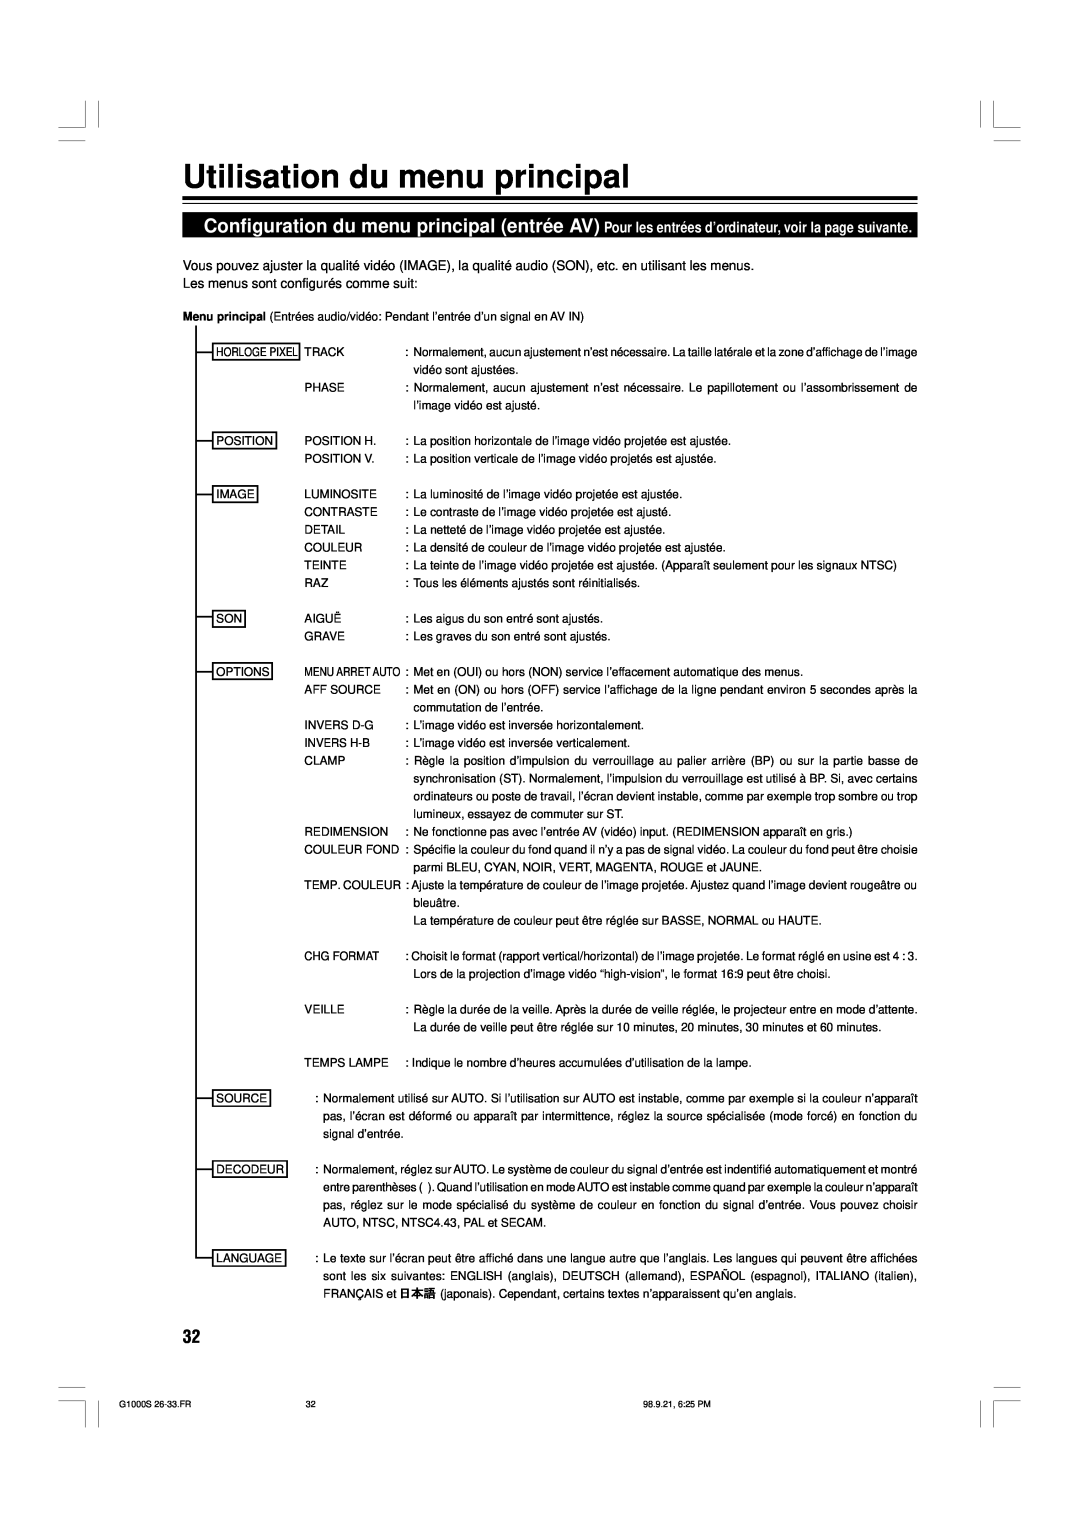 JVC G1000S manual Utilisation du menu principal 